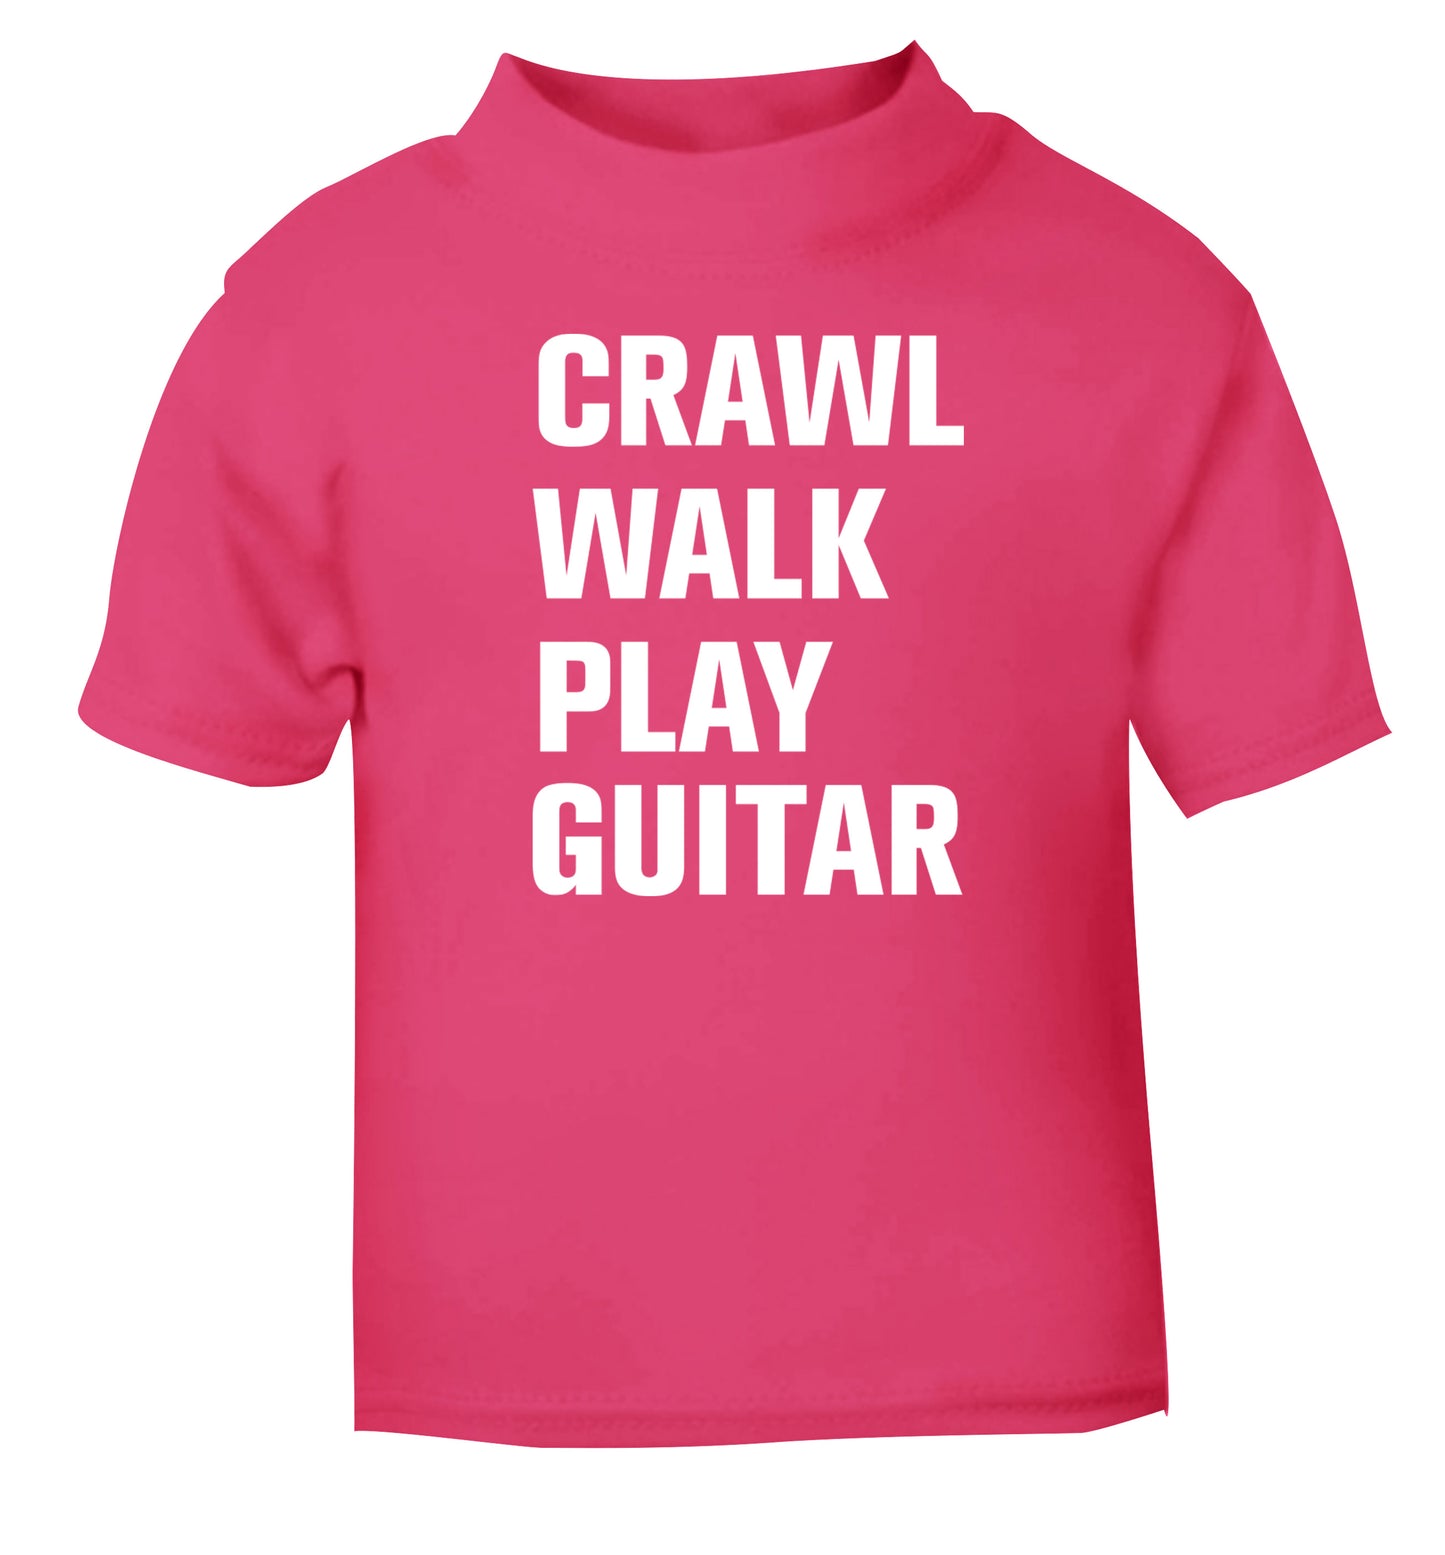 Crawl walk play guitar pink Baby Toddler Tshirt 2 Years